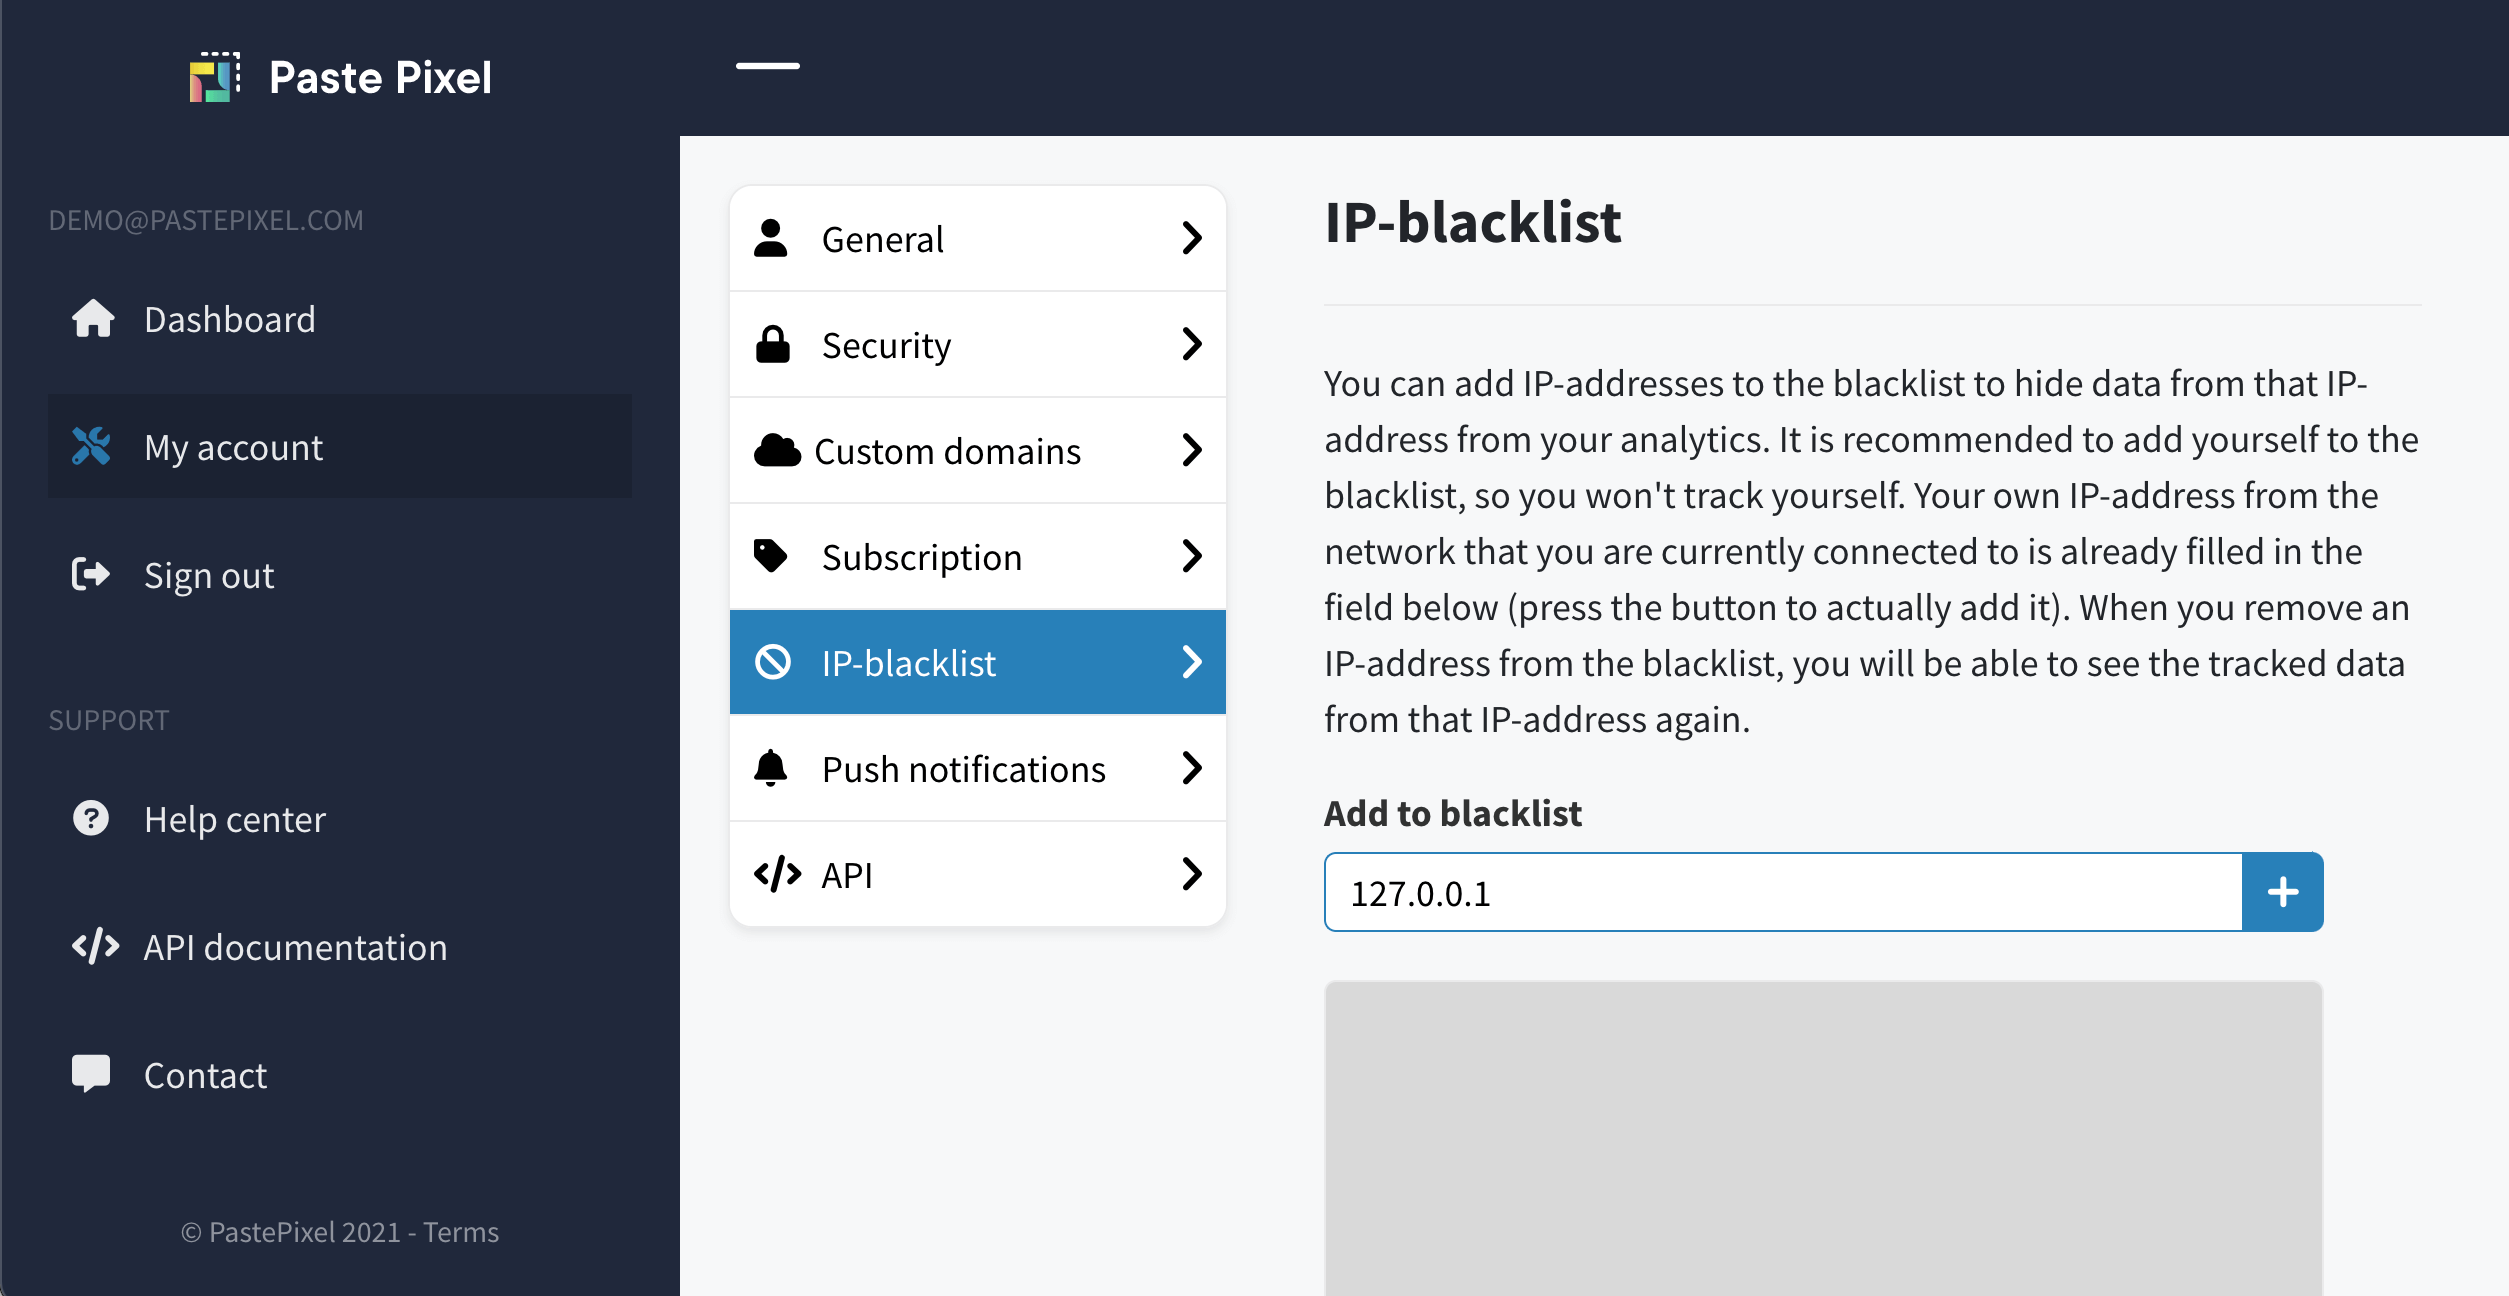 Add yourself to IP-blacklist via My Account